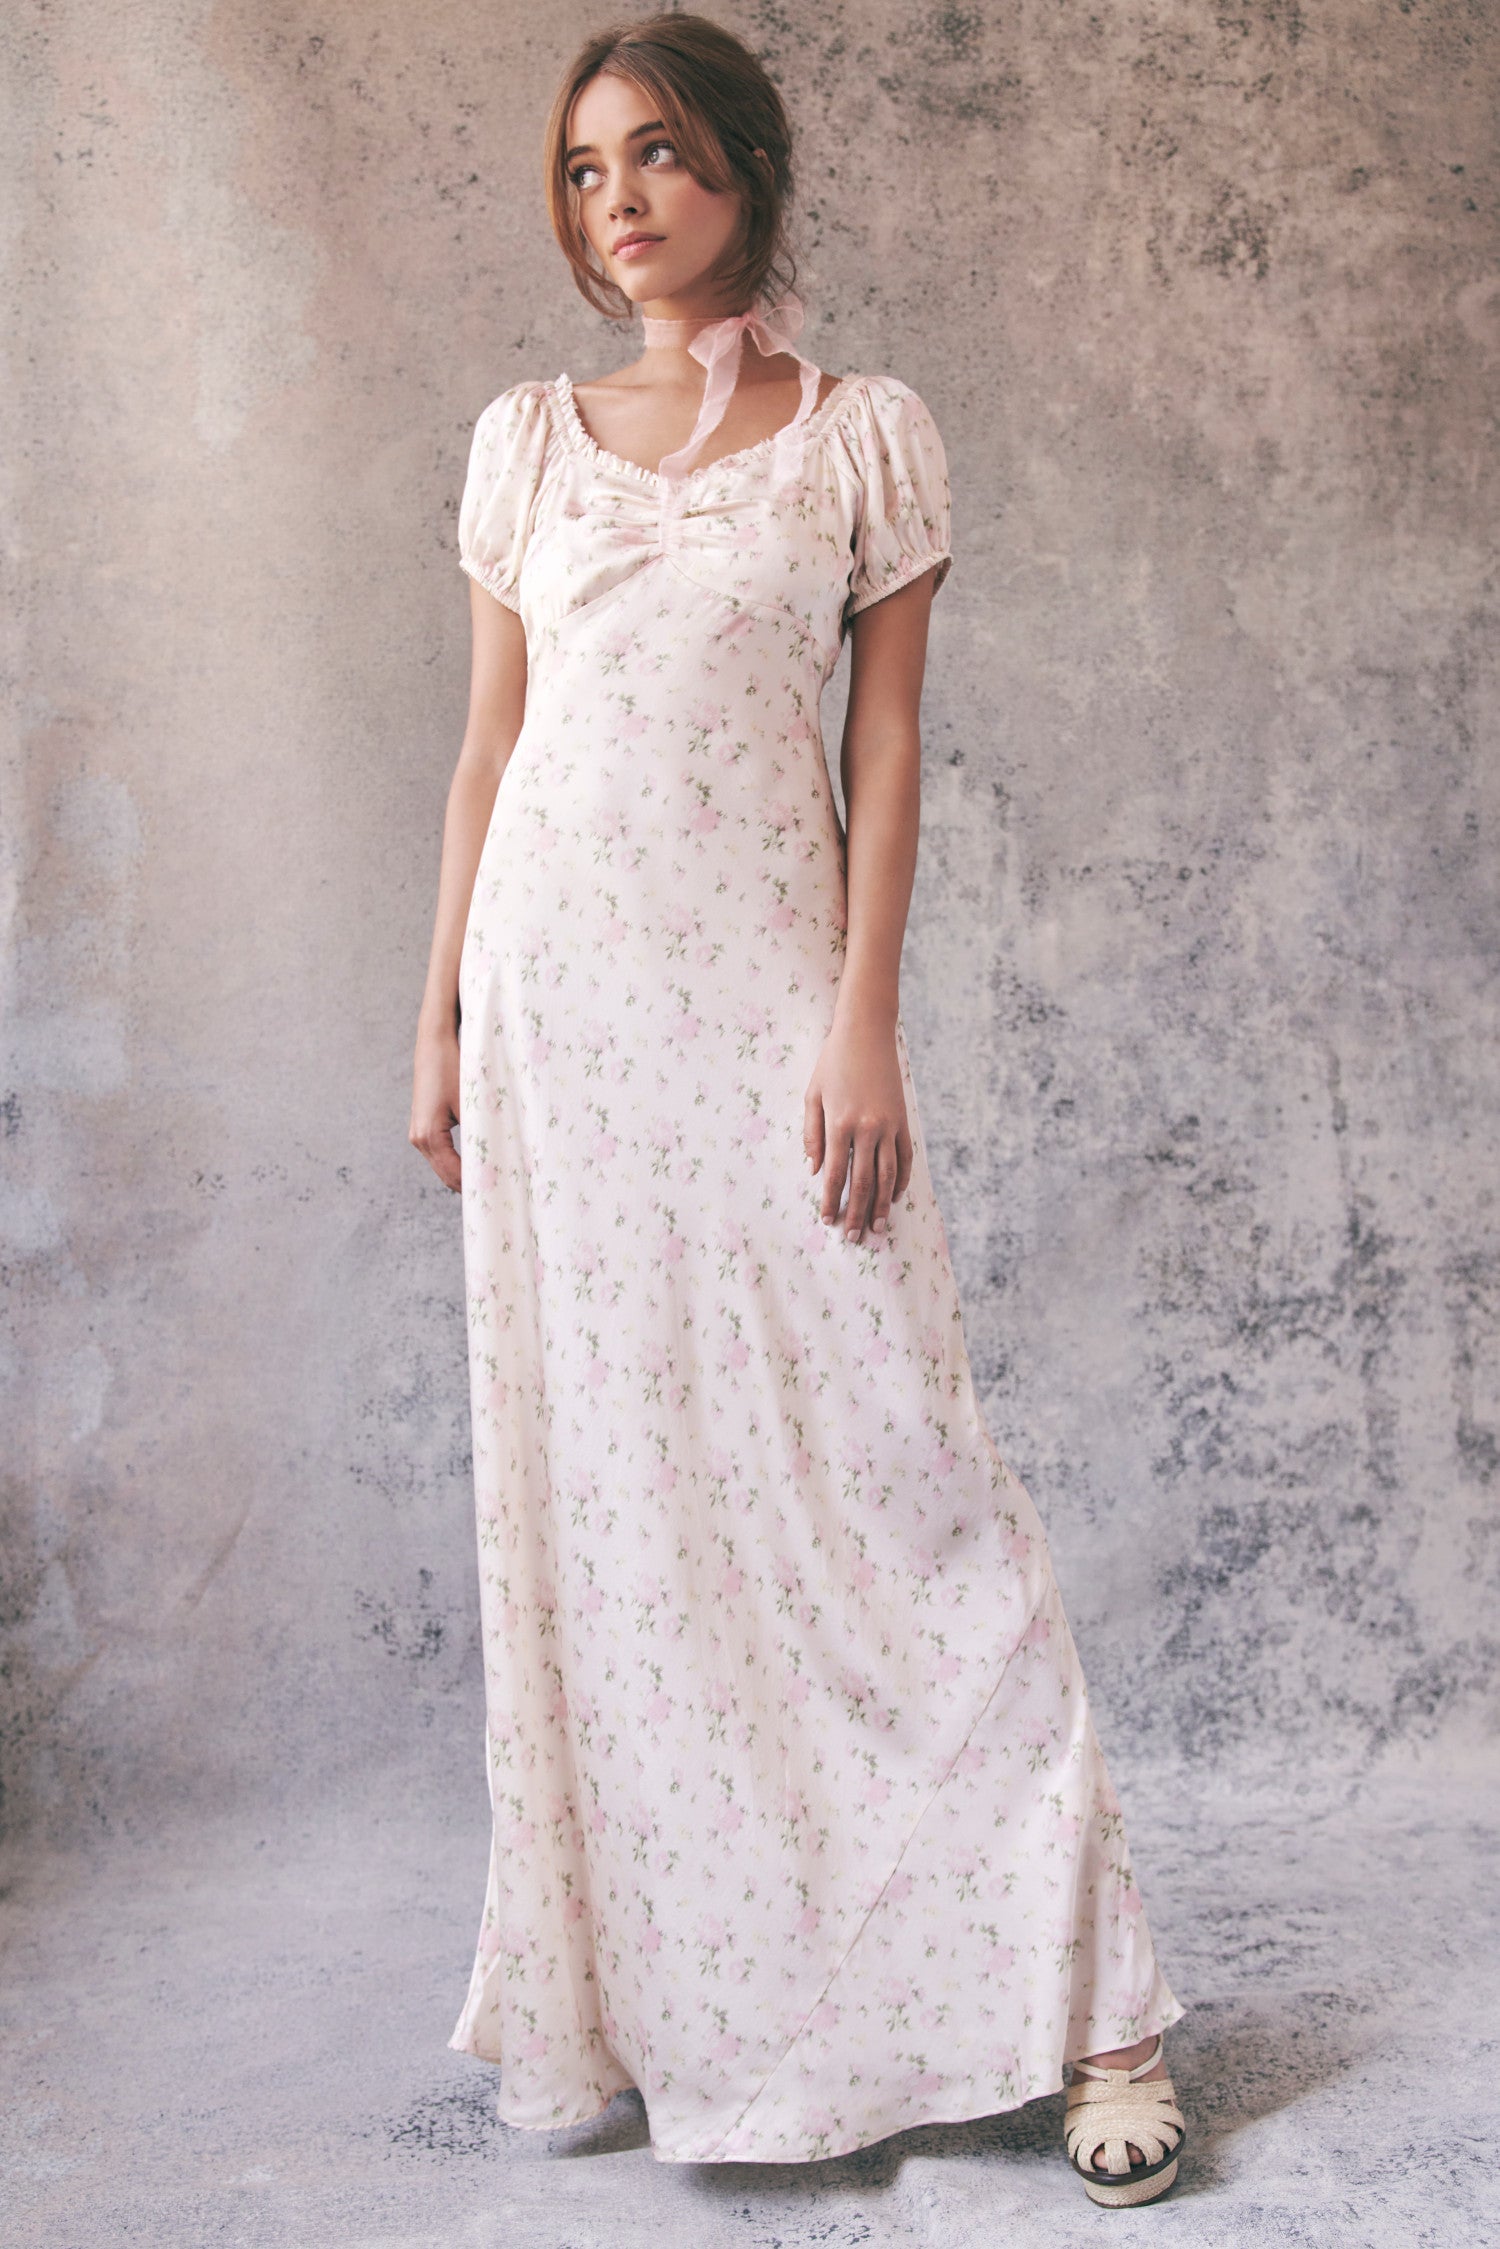 Model wearing cream floral maxi dress